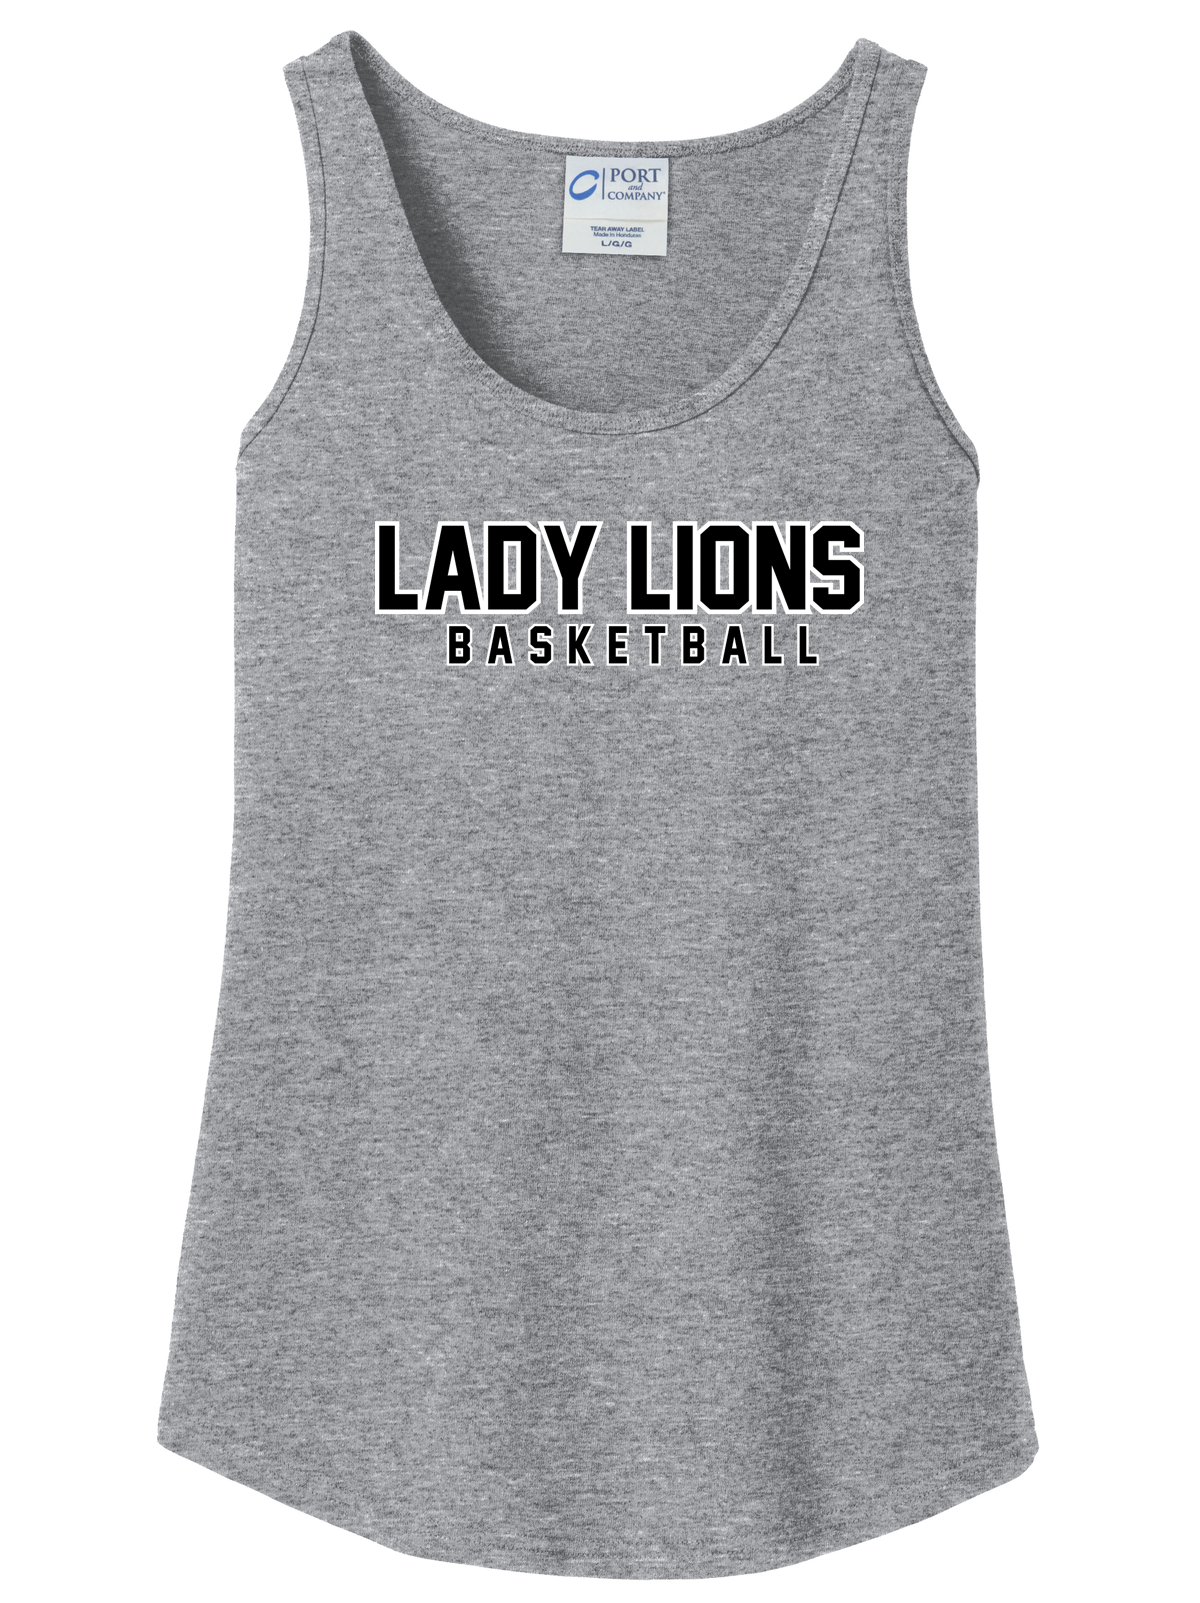 Lady Lions Basketball Women's Tank Top